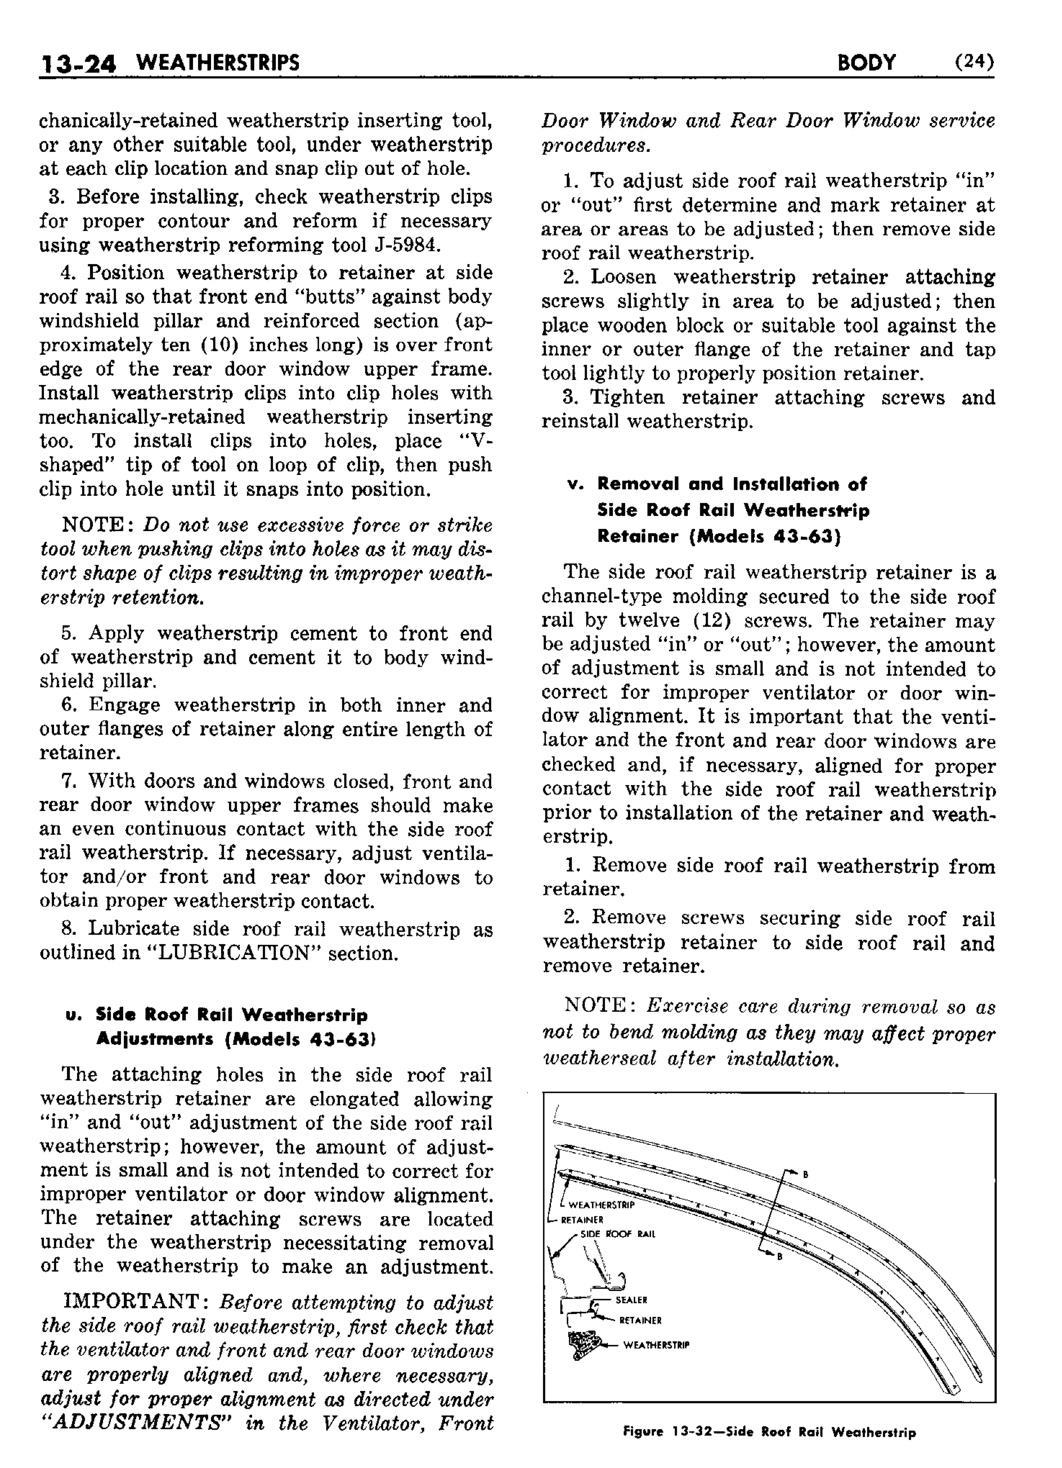 n_1958 Buick Body Service Manual-025-025.jpg